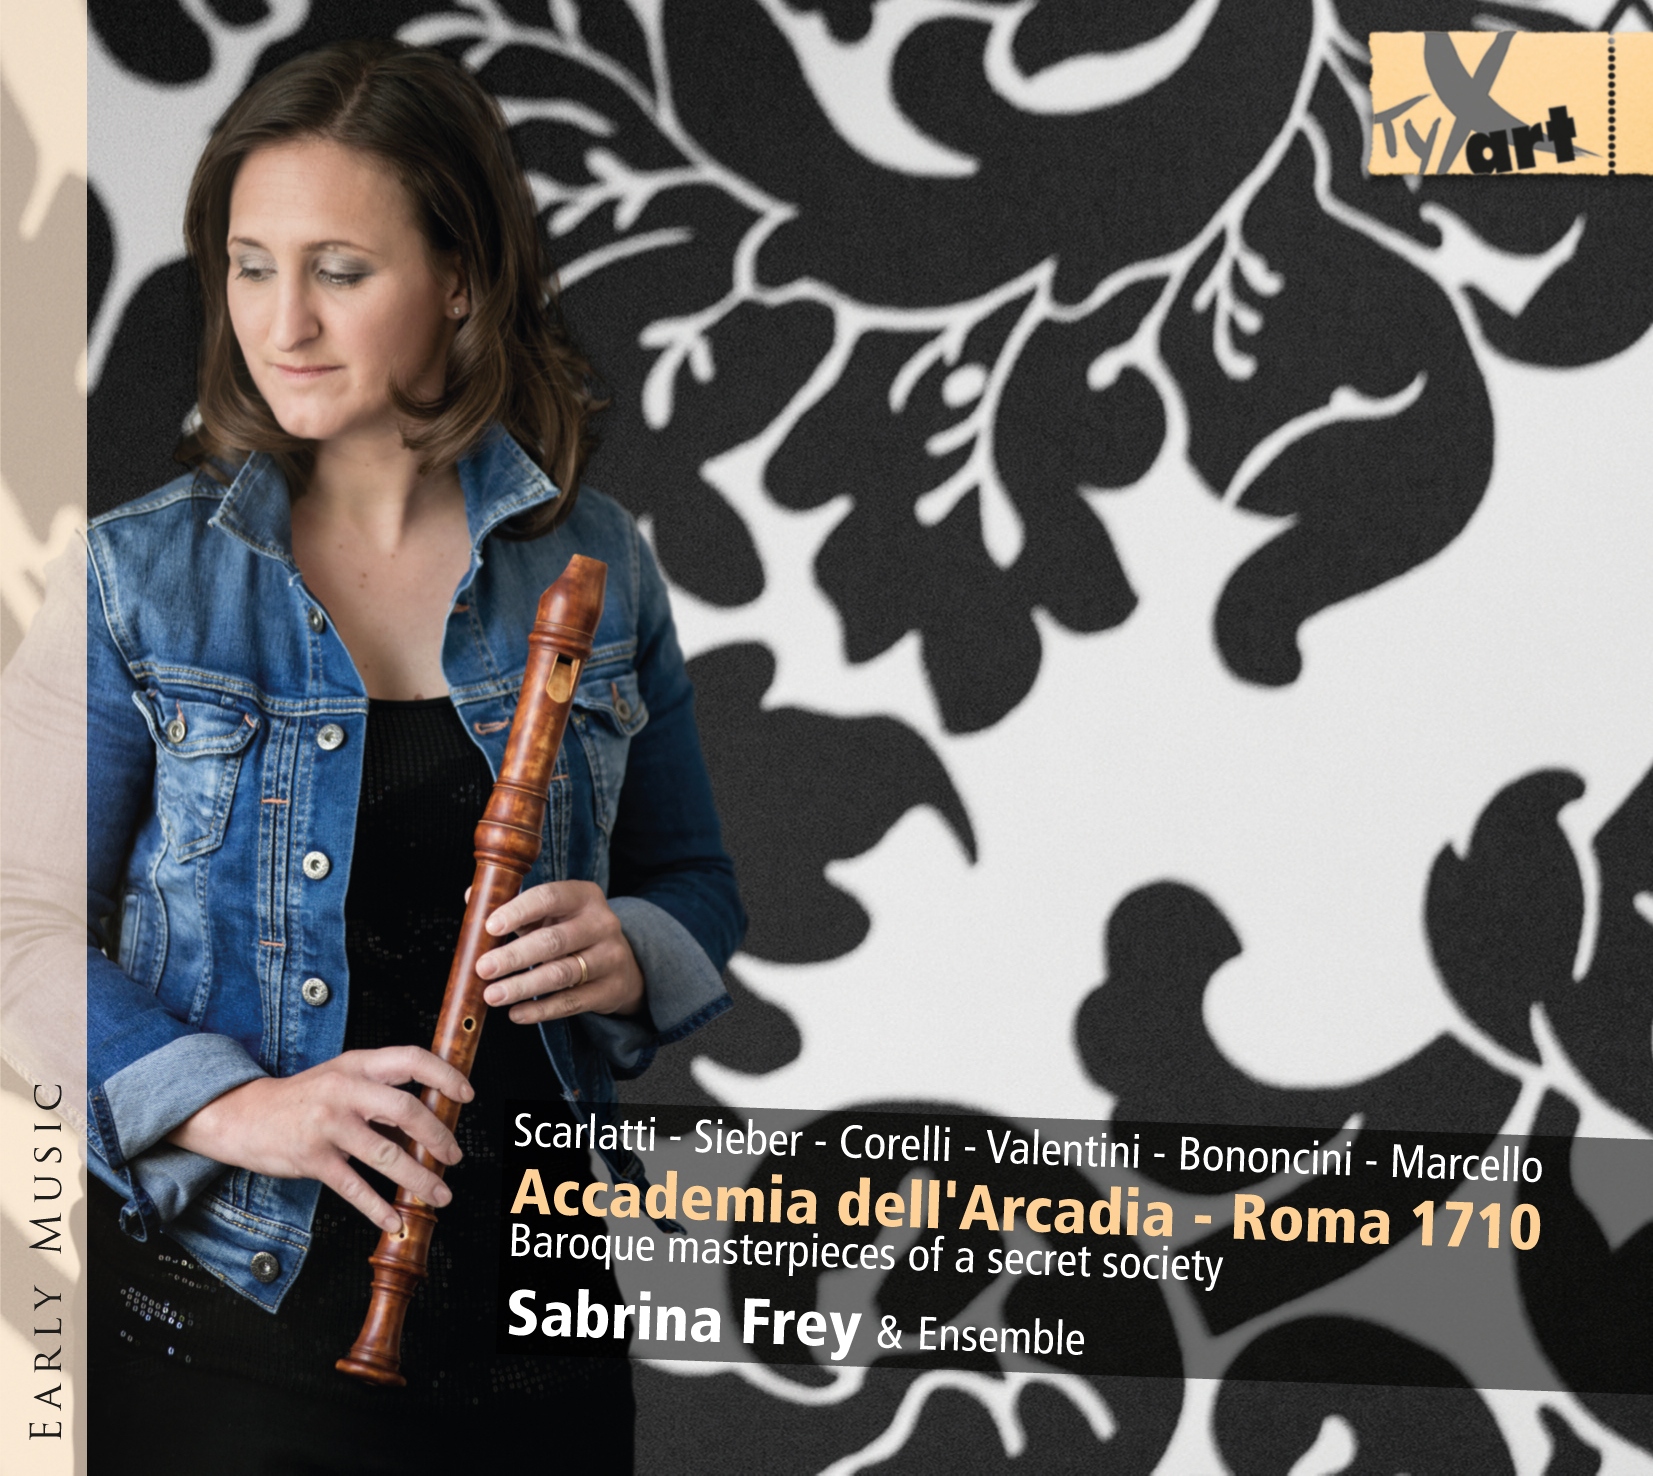 Accademia dell'Arcadia - Roma 1710 - Sabrina Frey